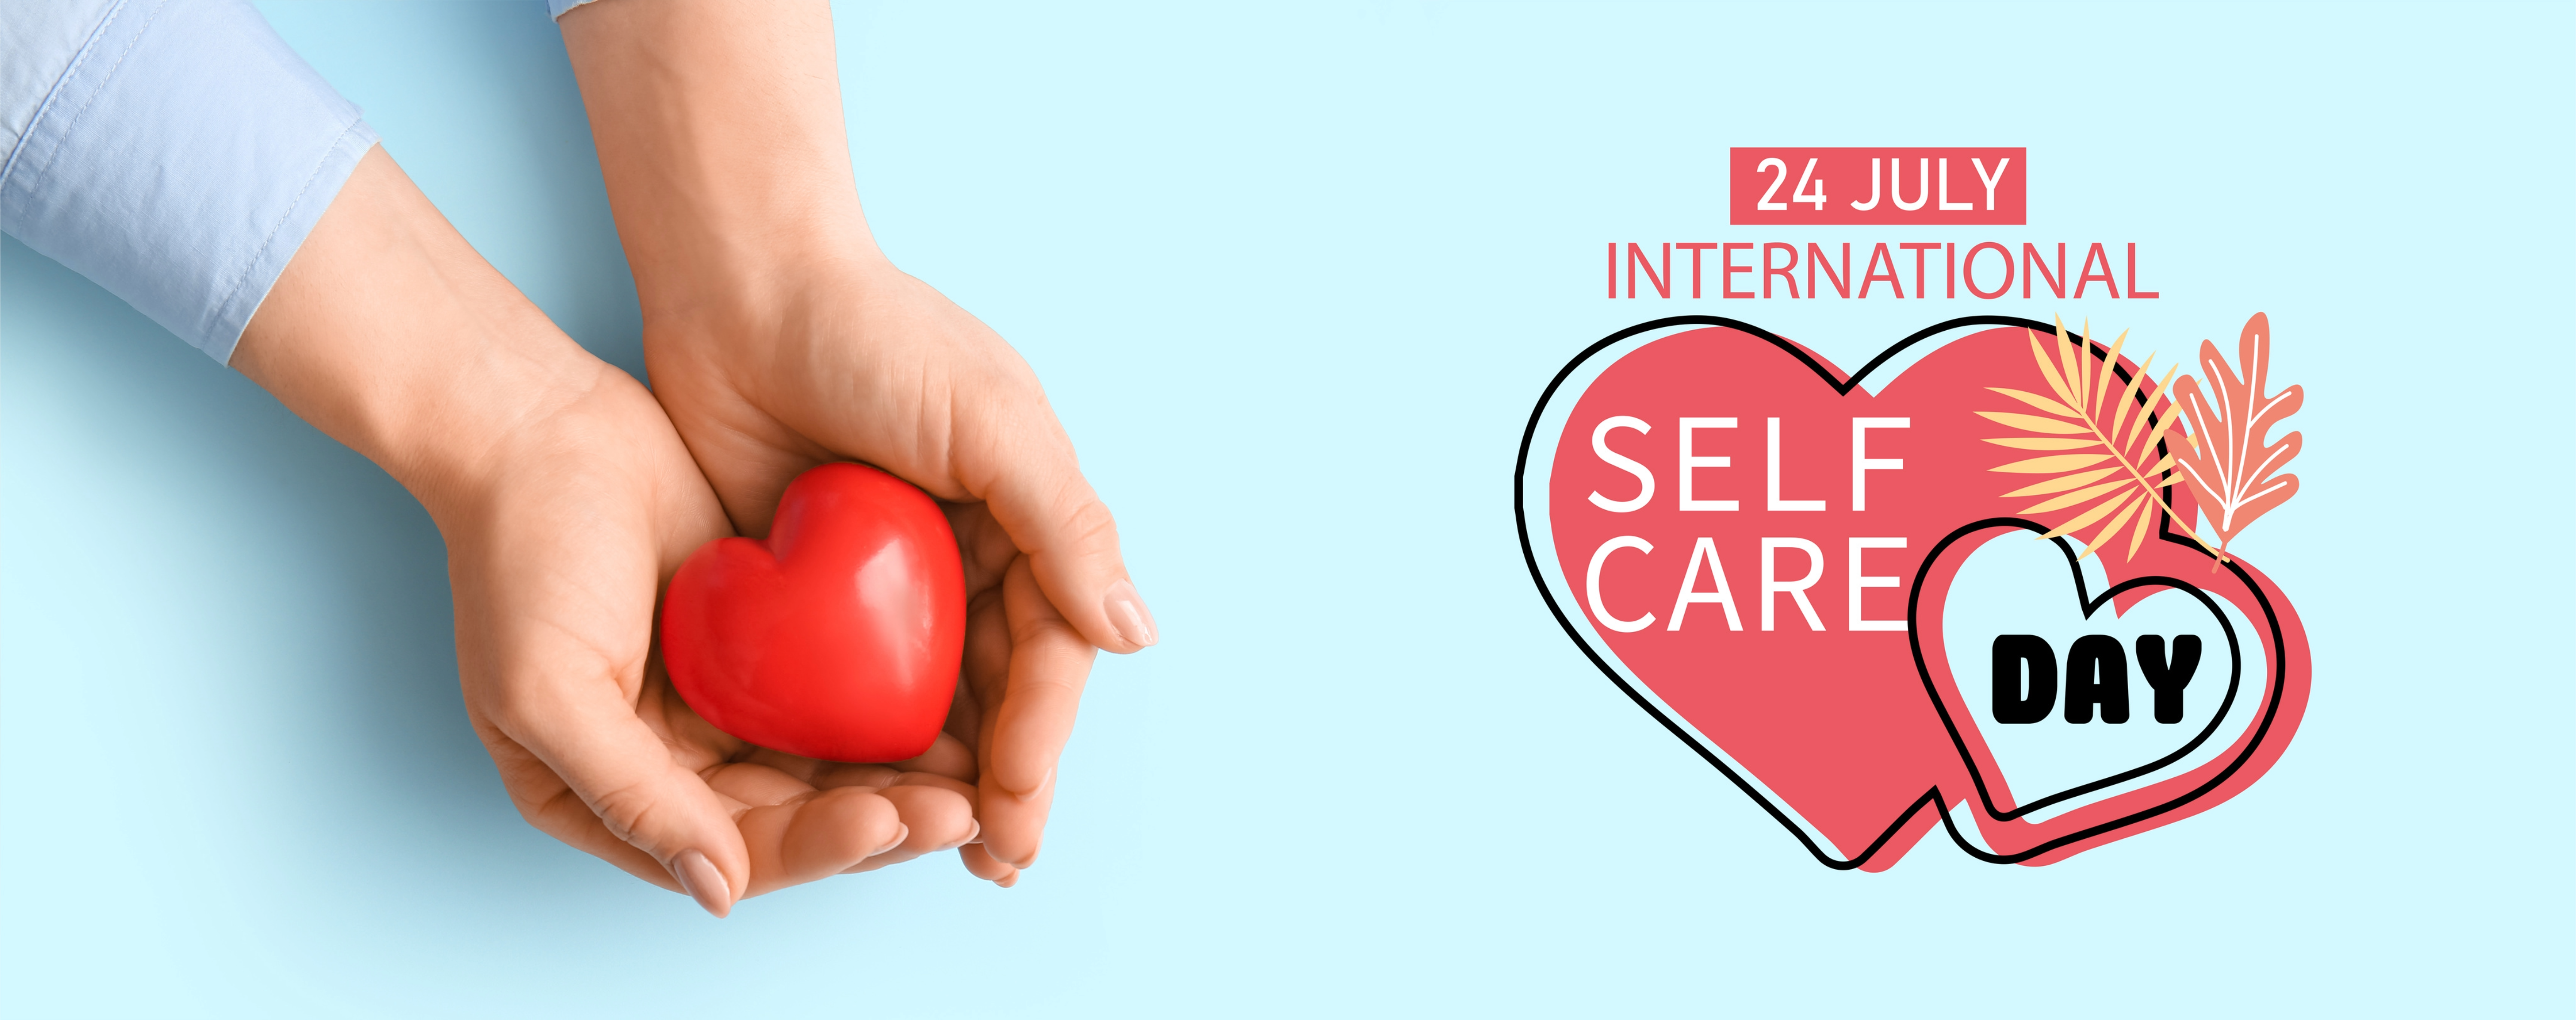 Self-Care Day - 